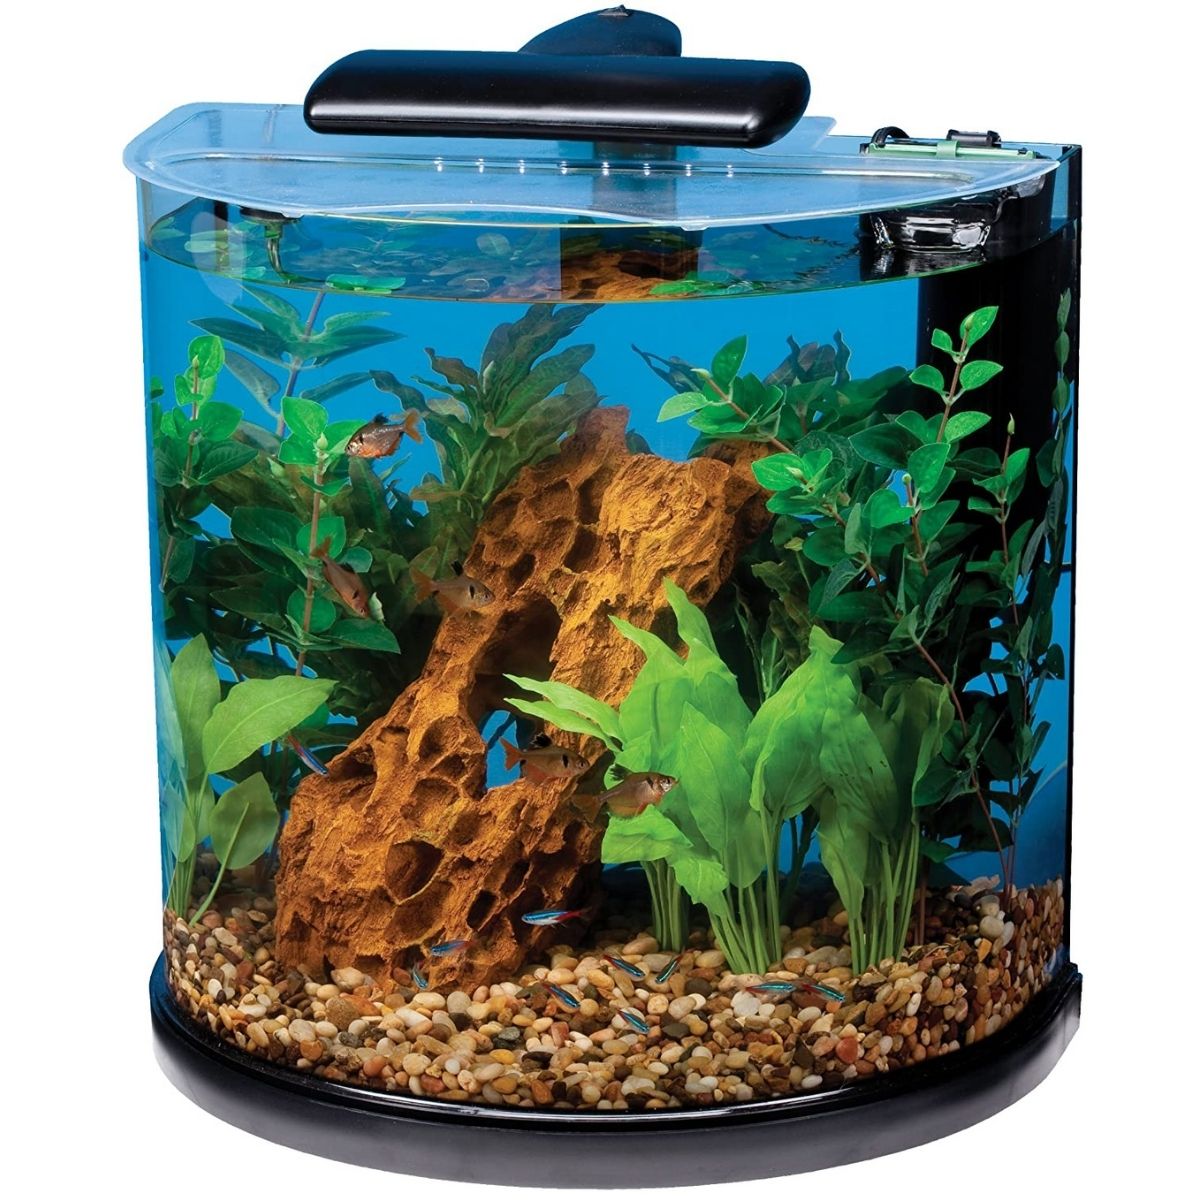 The best 10 gallon fish tank option: Tetra Half Moon Aquarium Kit